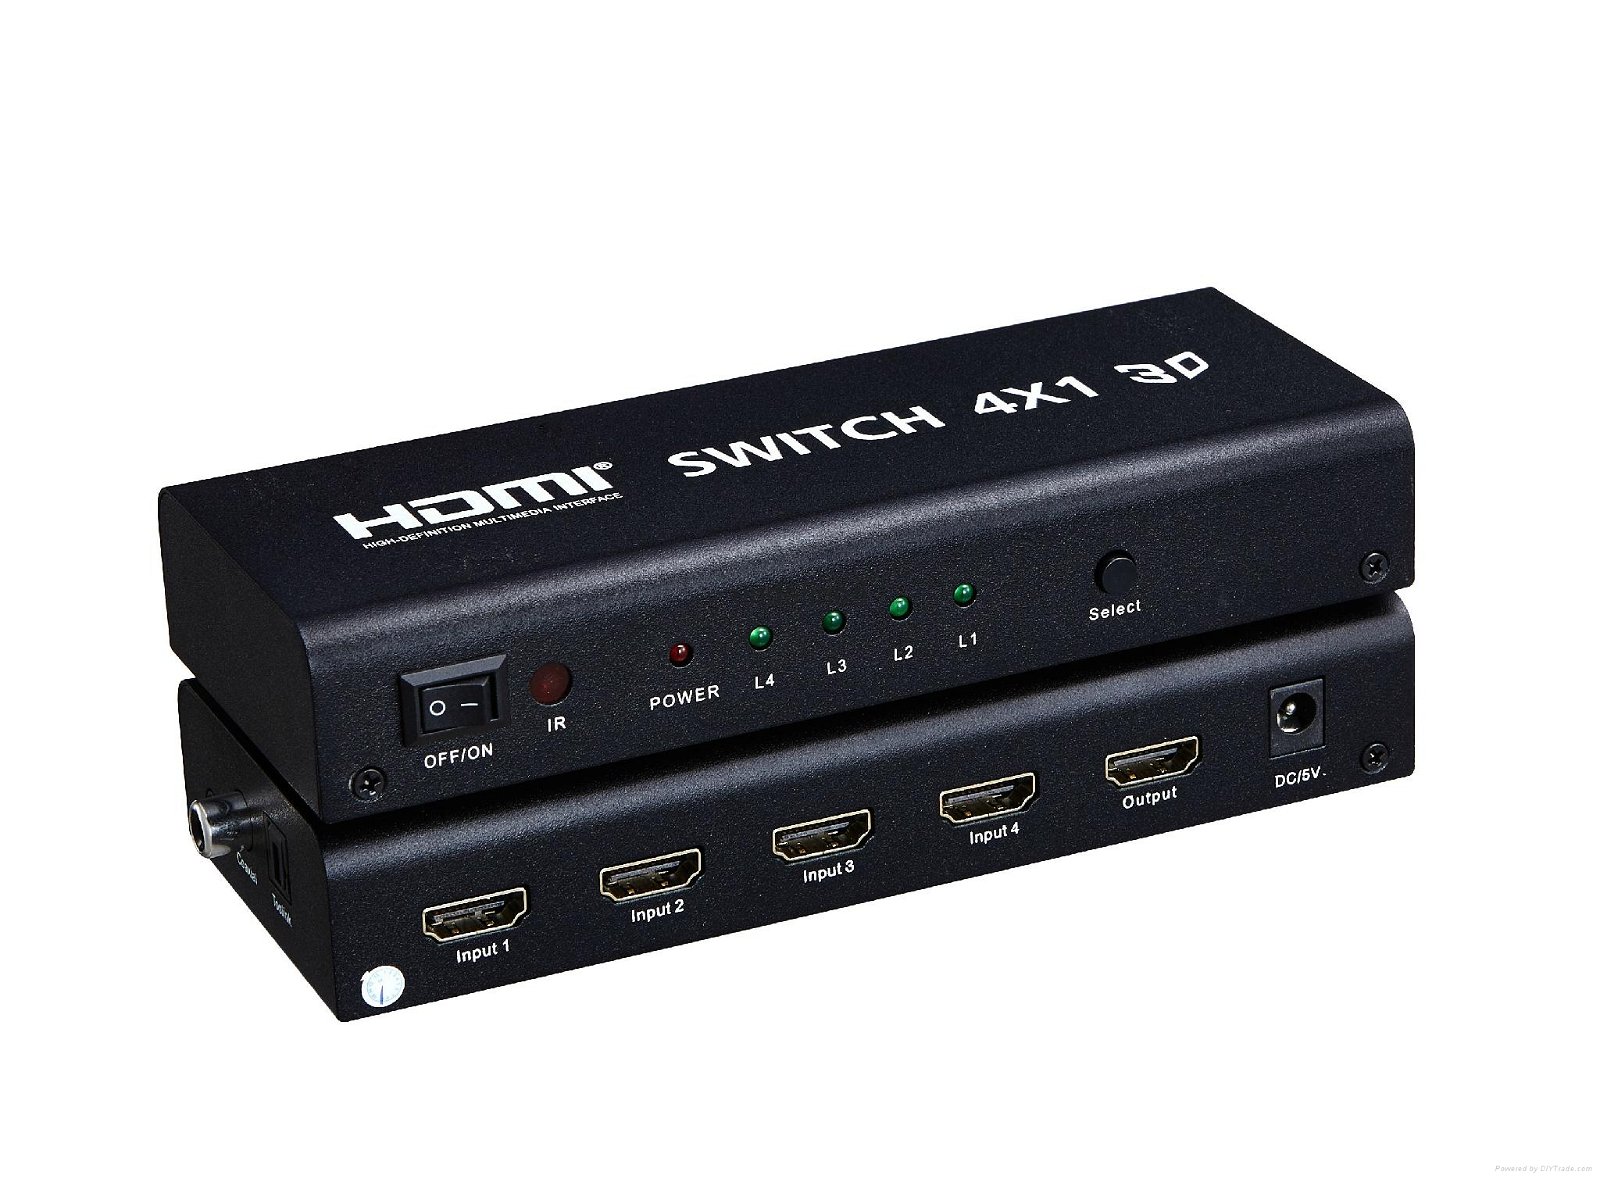 HDMI Switcher 4x1 With audio output  2